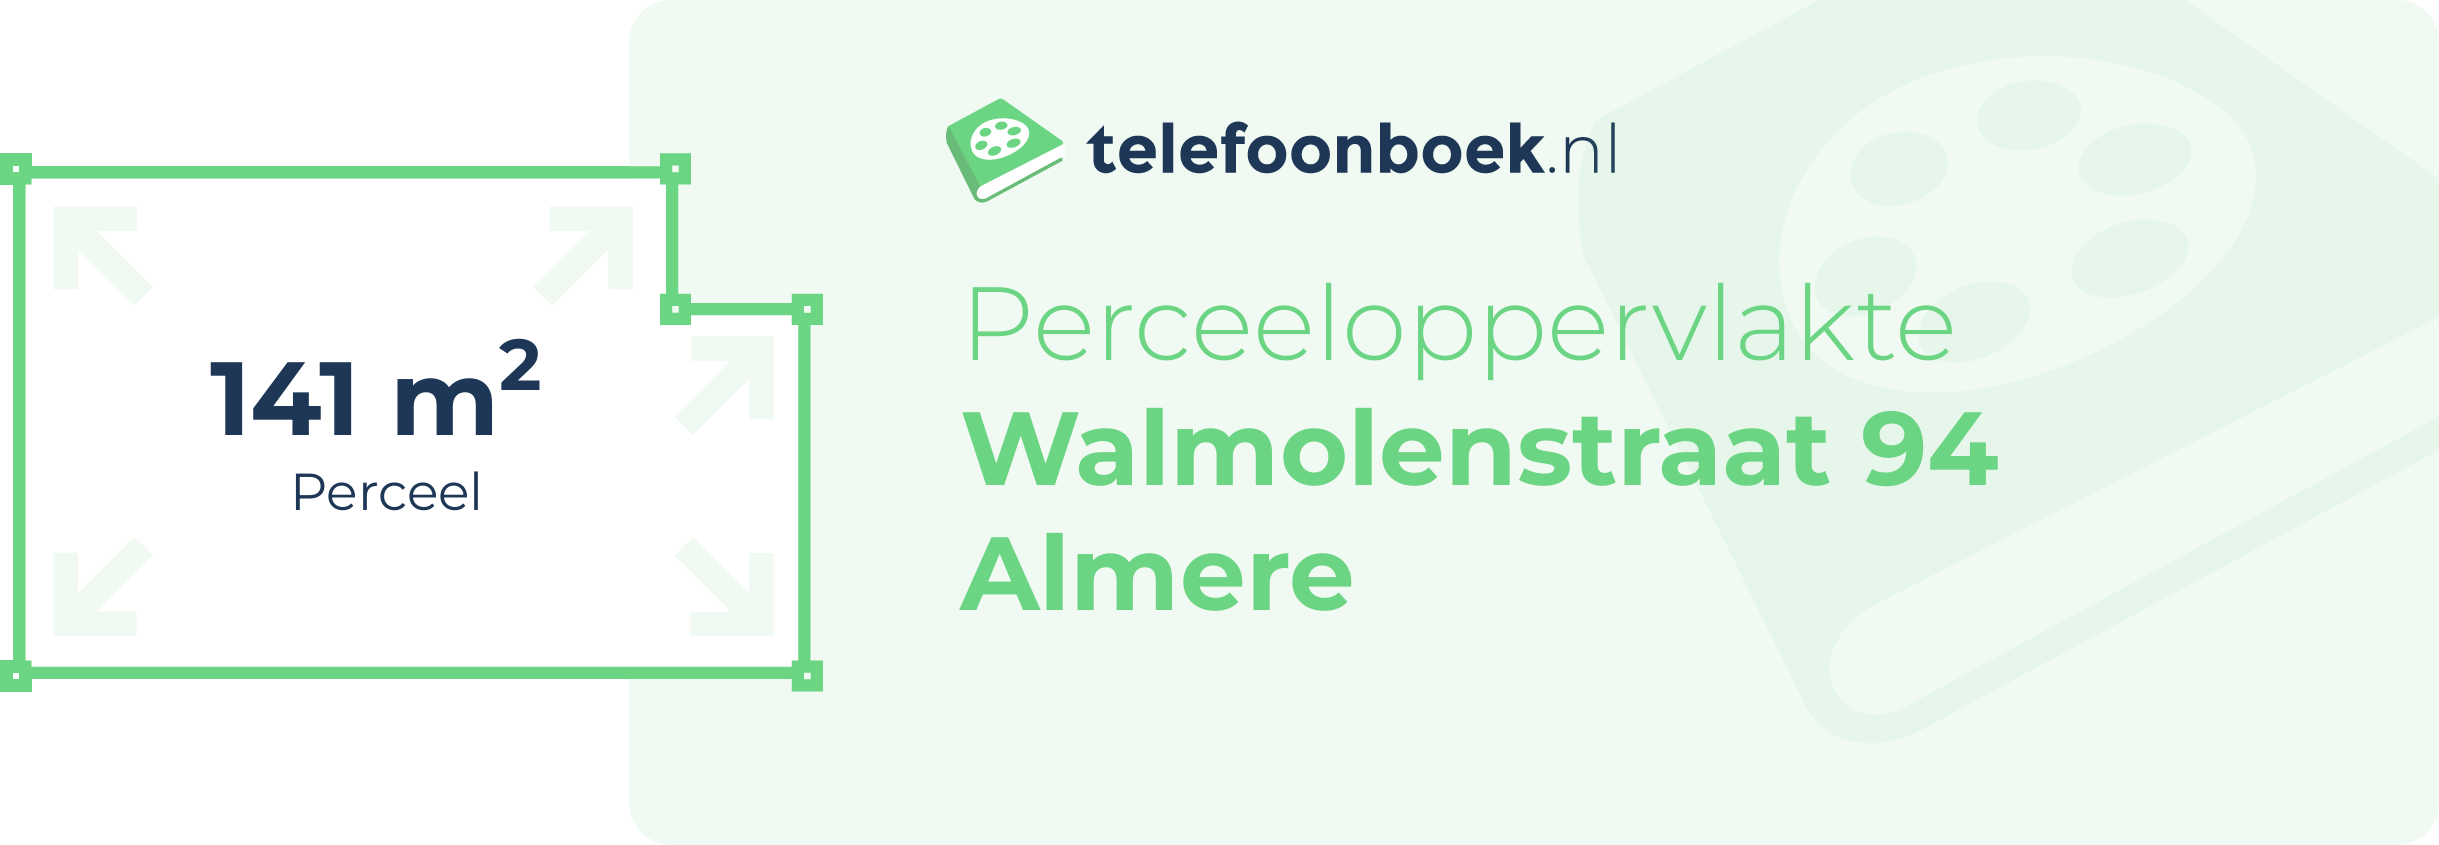 Perceeloppervlakte Walmolenstraat 94 Almere